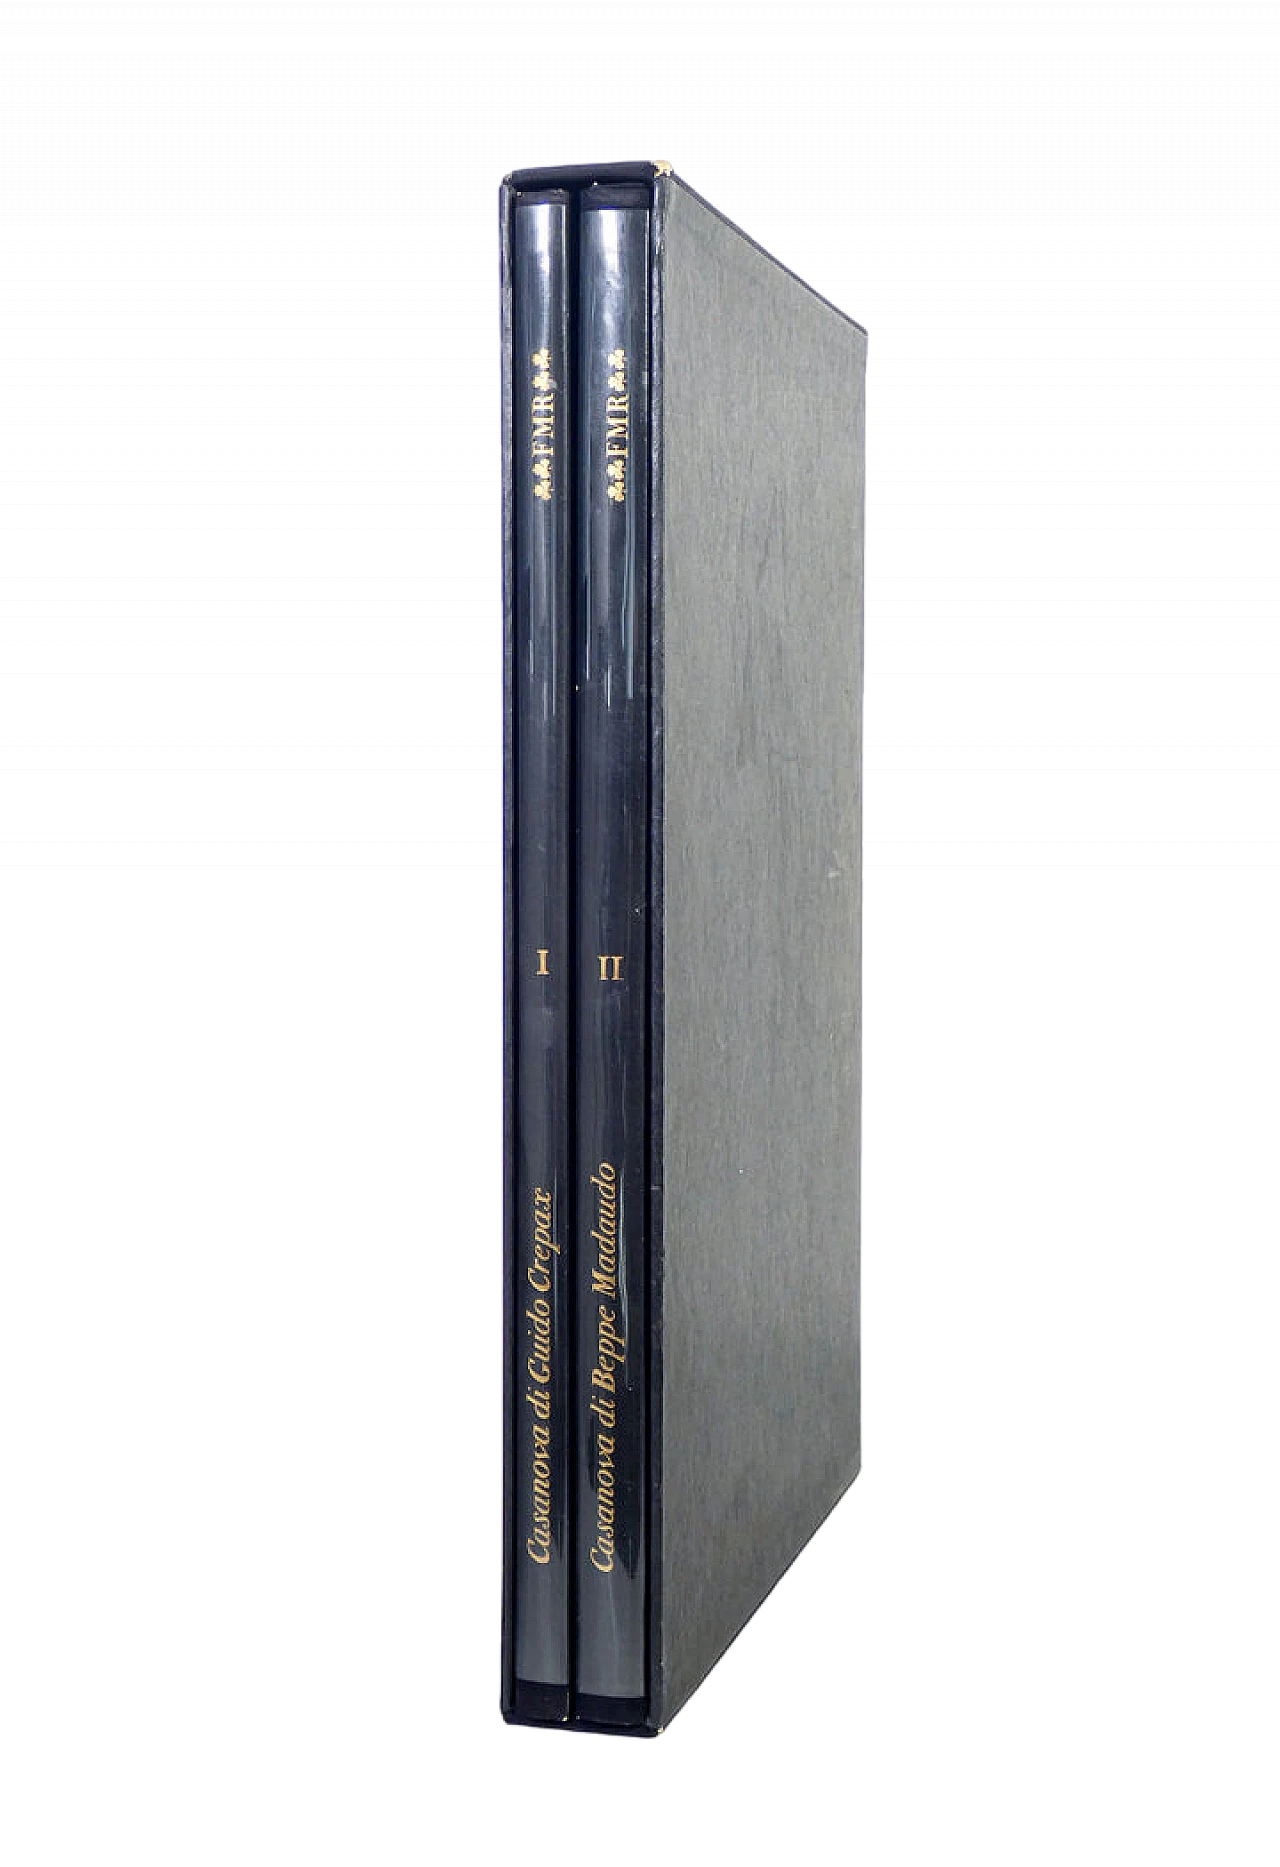 Crepax and Madaudo, Casanova, pair of volumes, FMR Editore, 1977 2